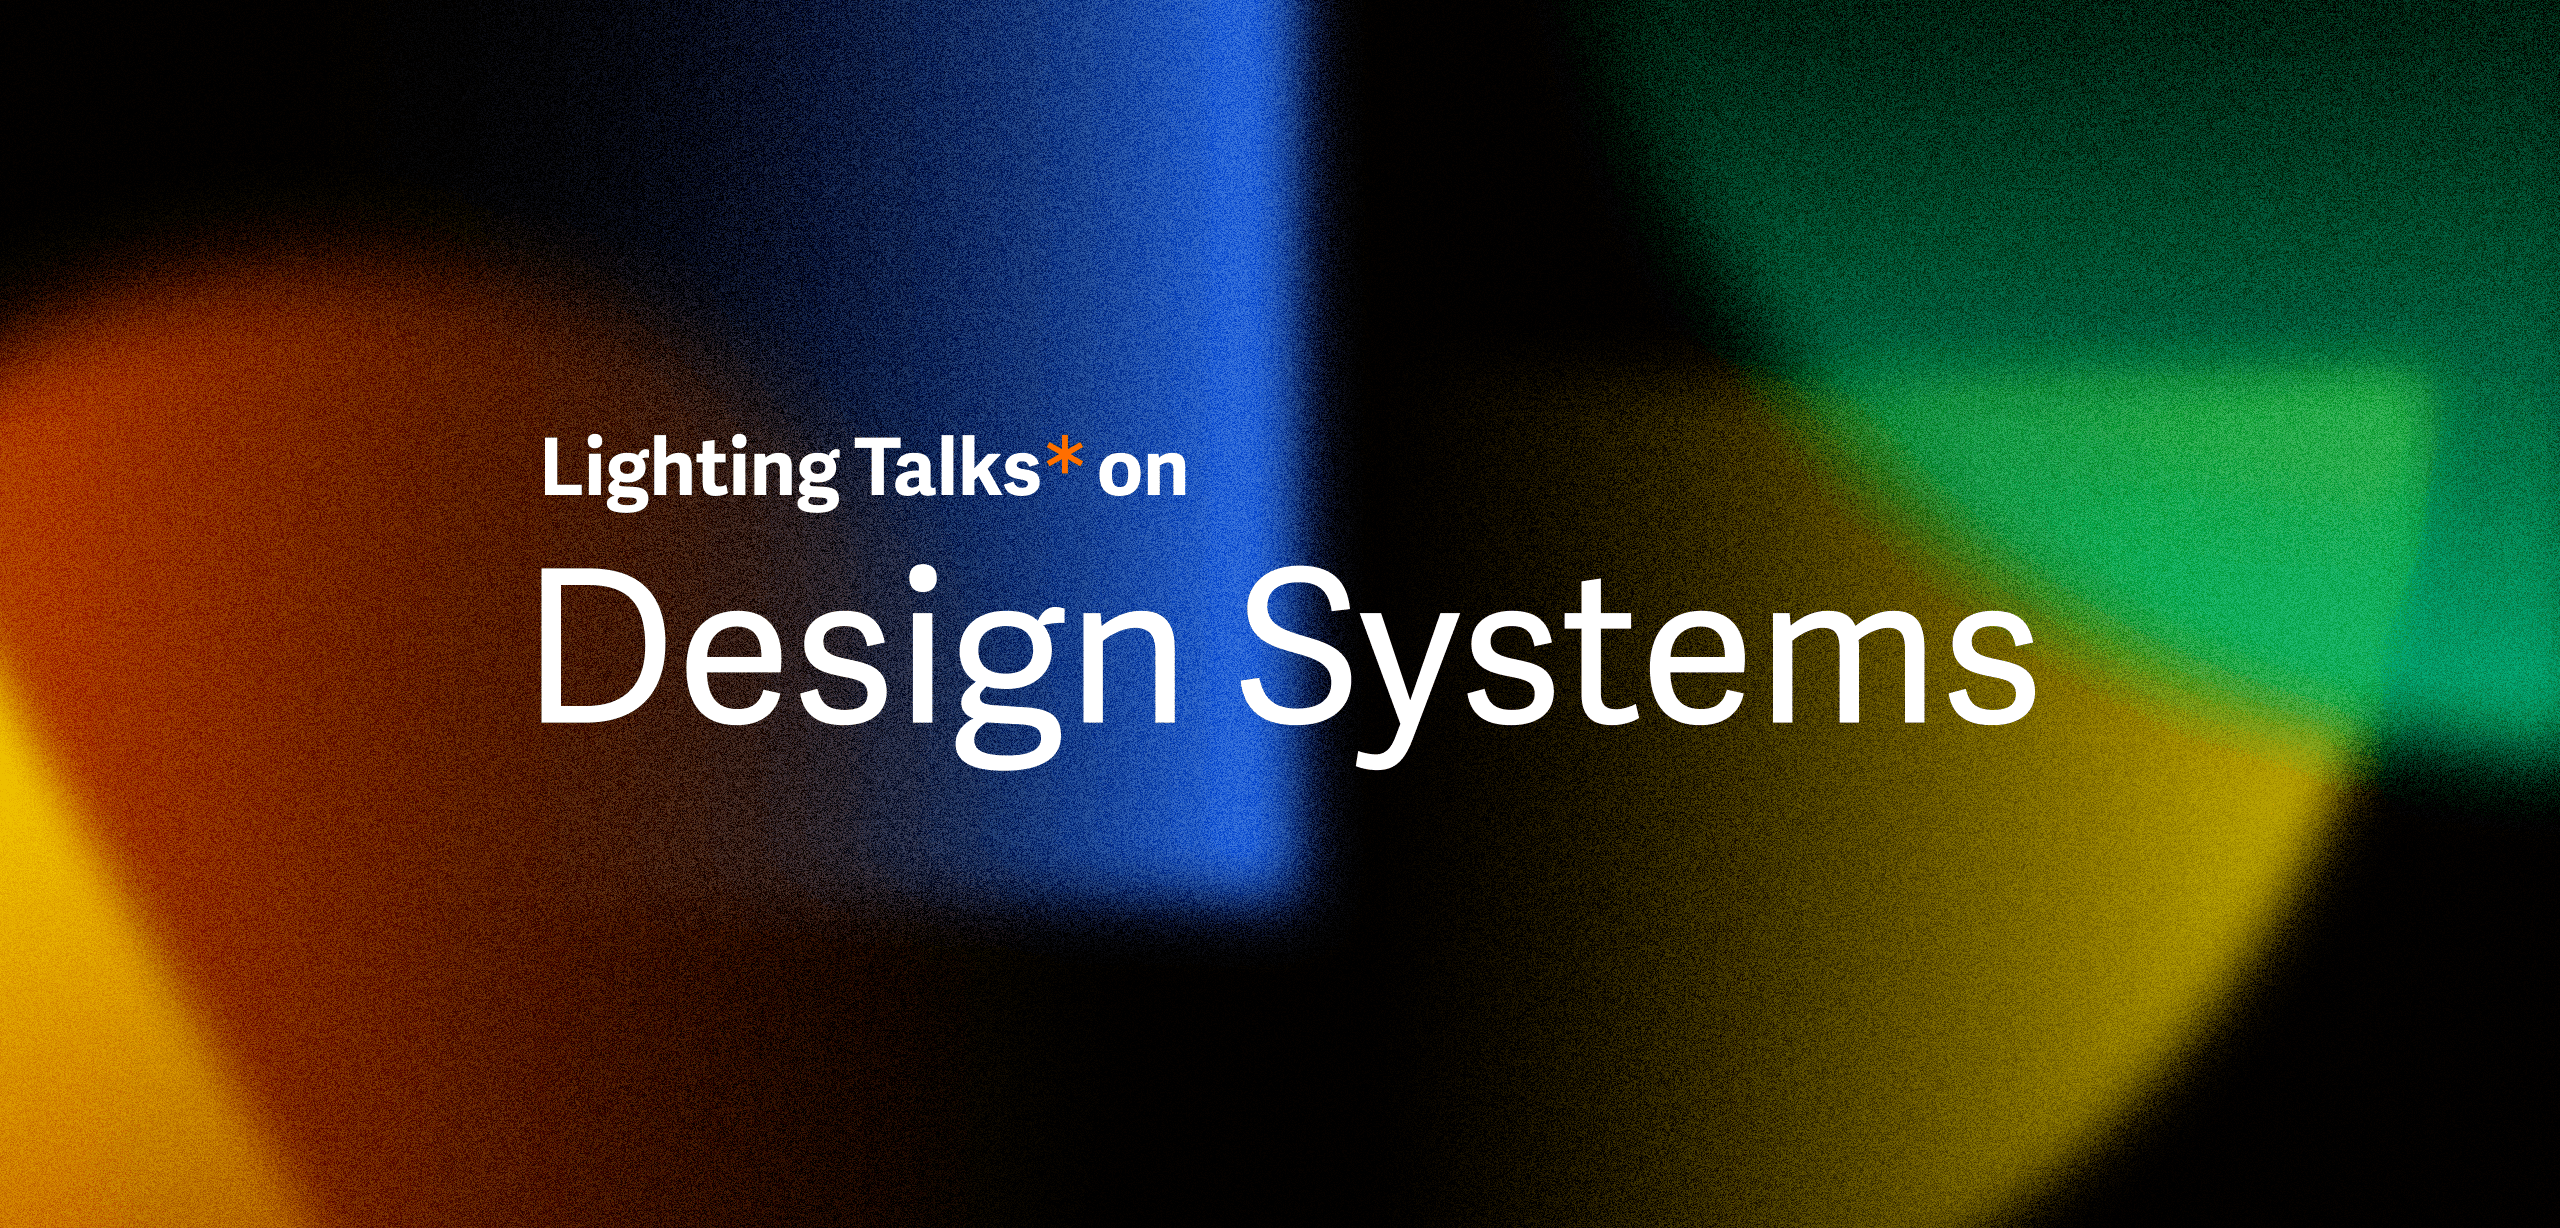 Lighting Talks* on Design Systems